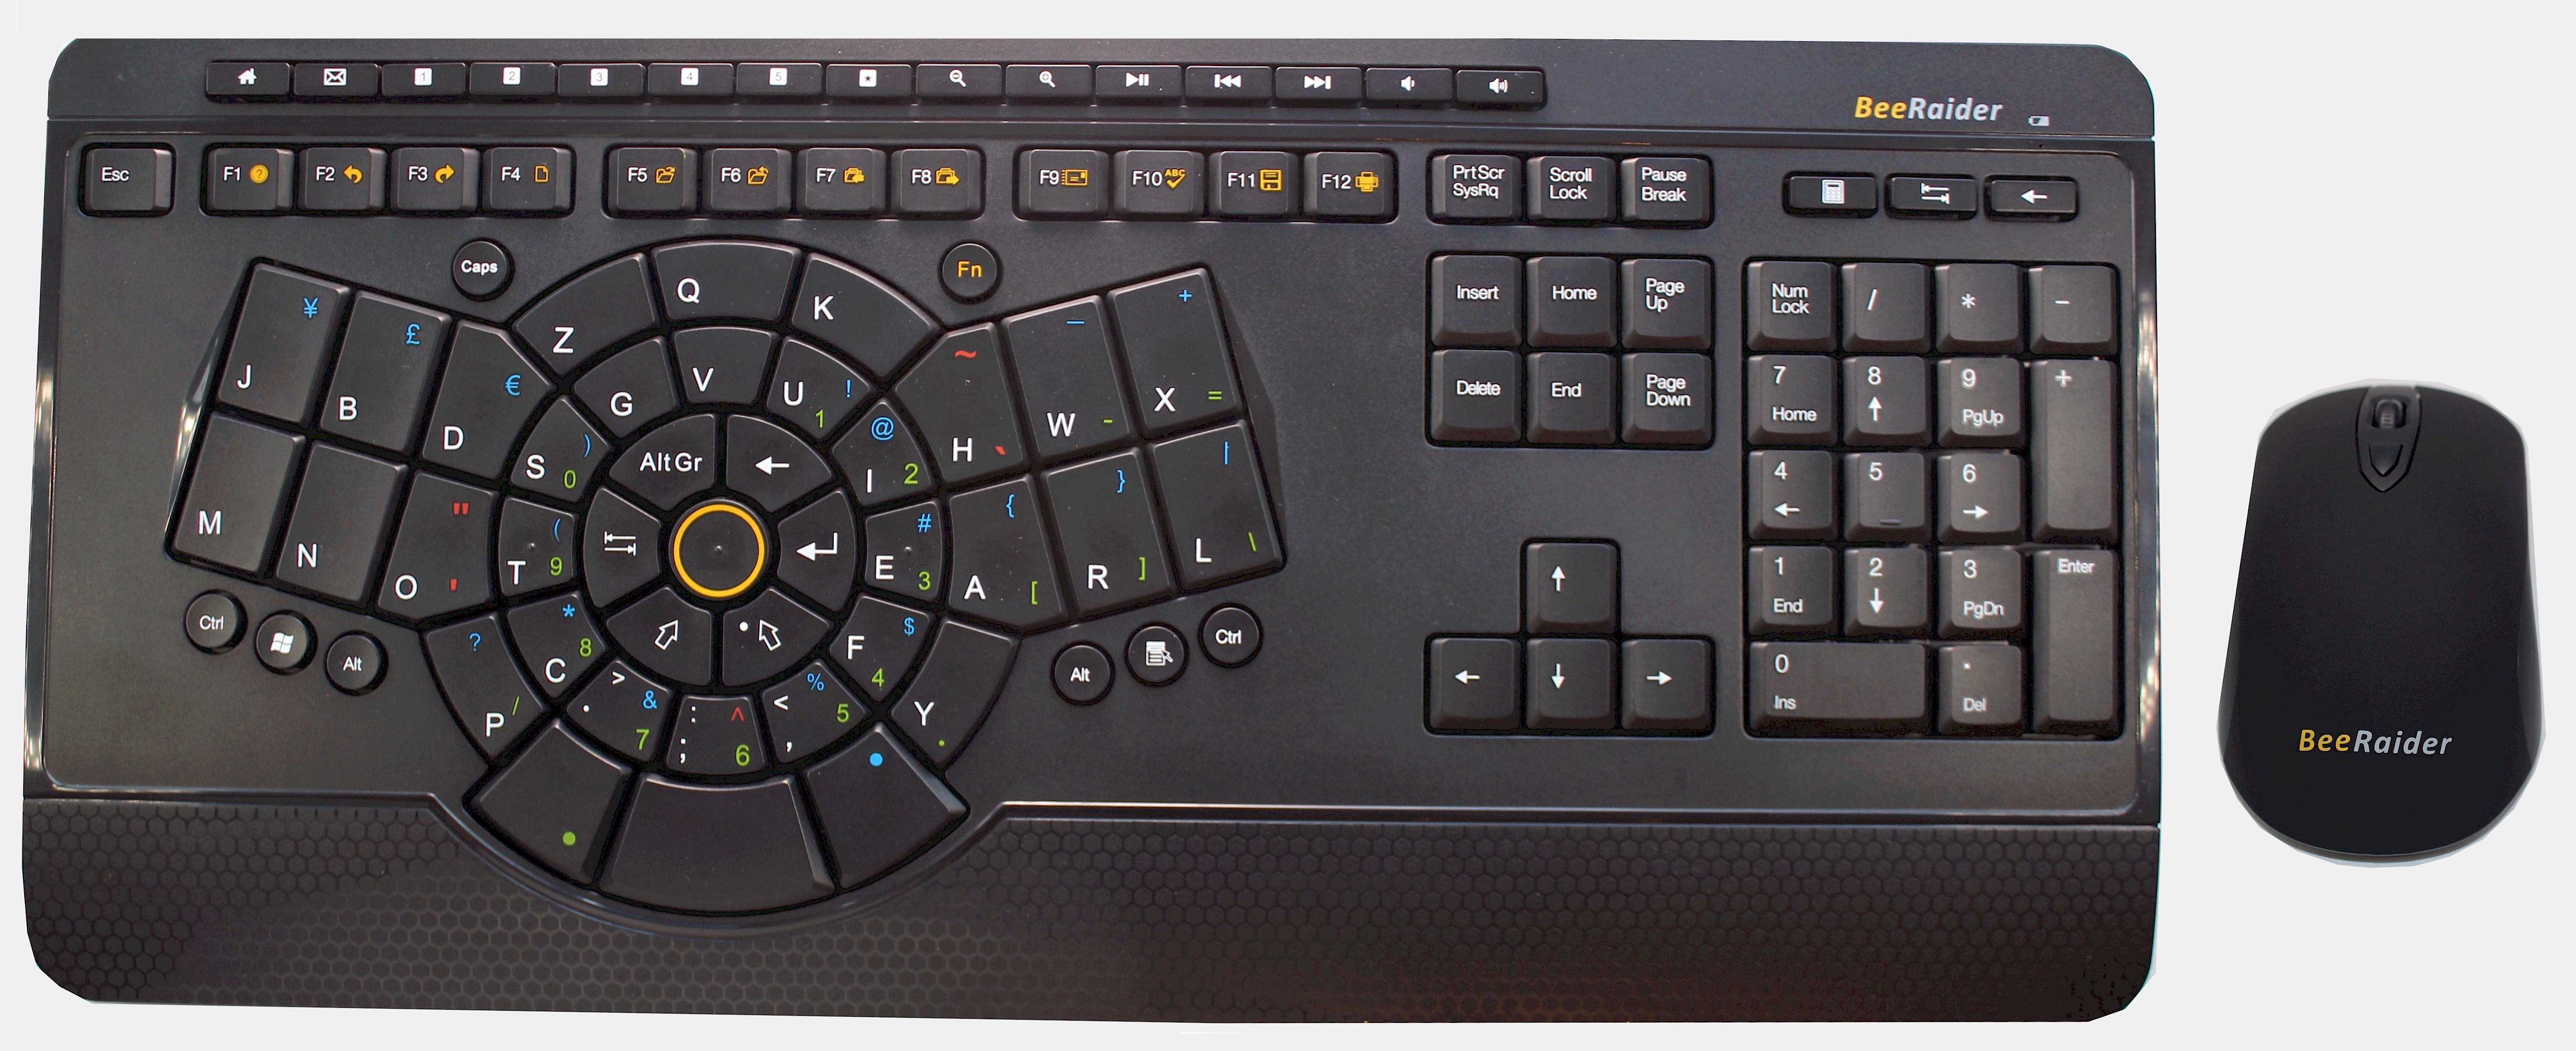 BeeRaider keyboard 2021-01-25